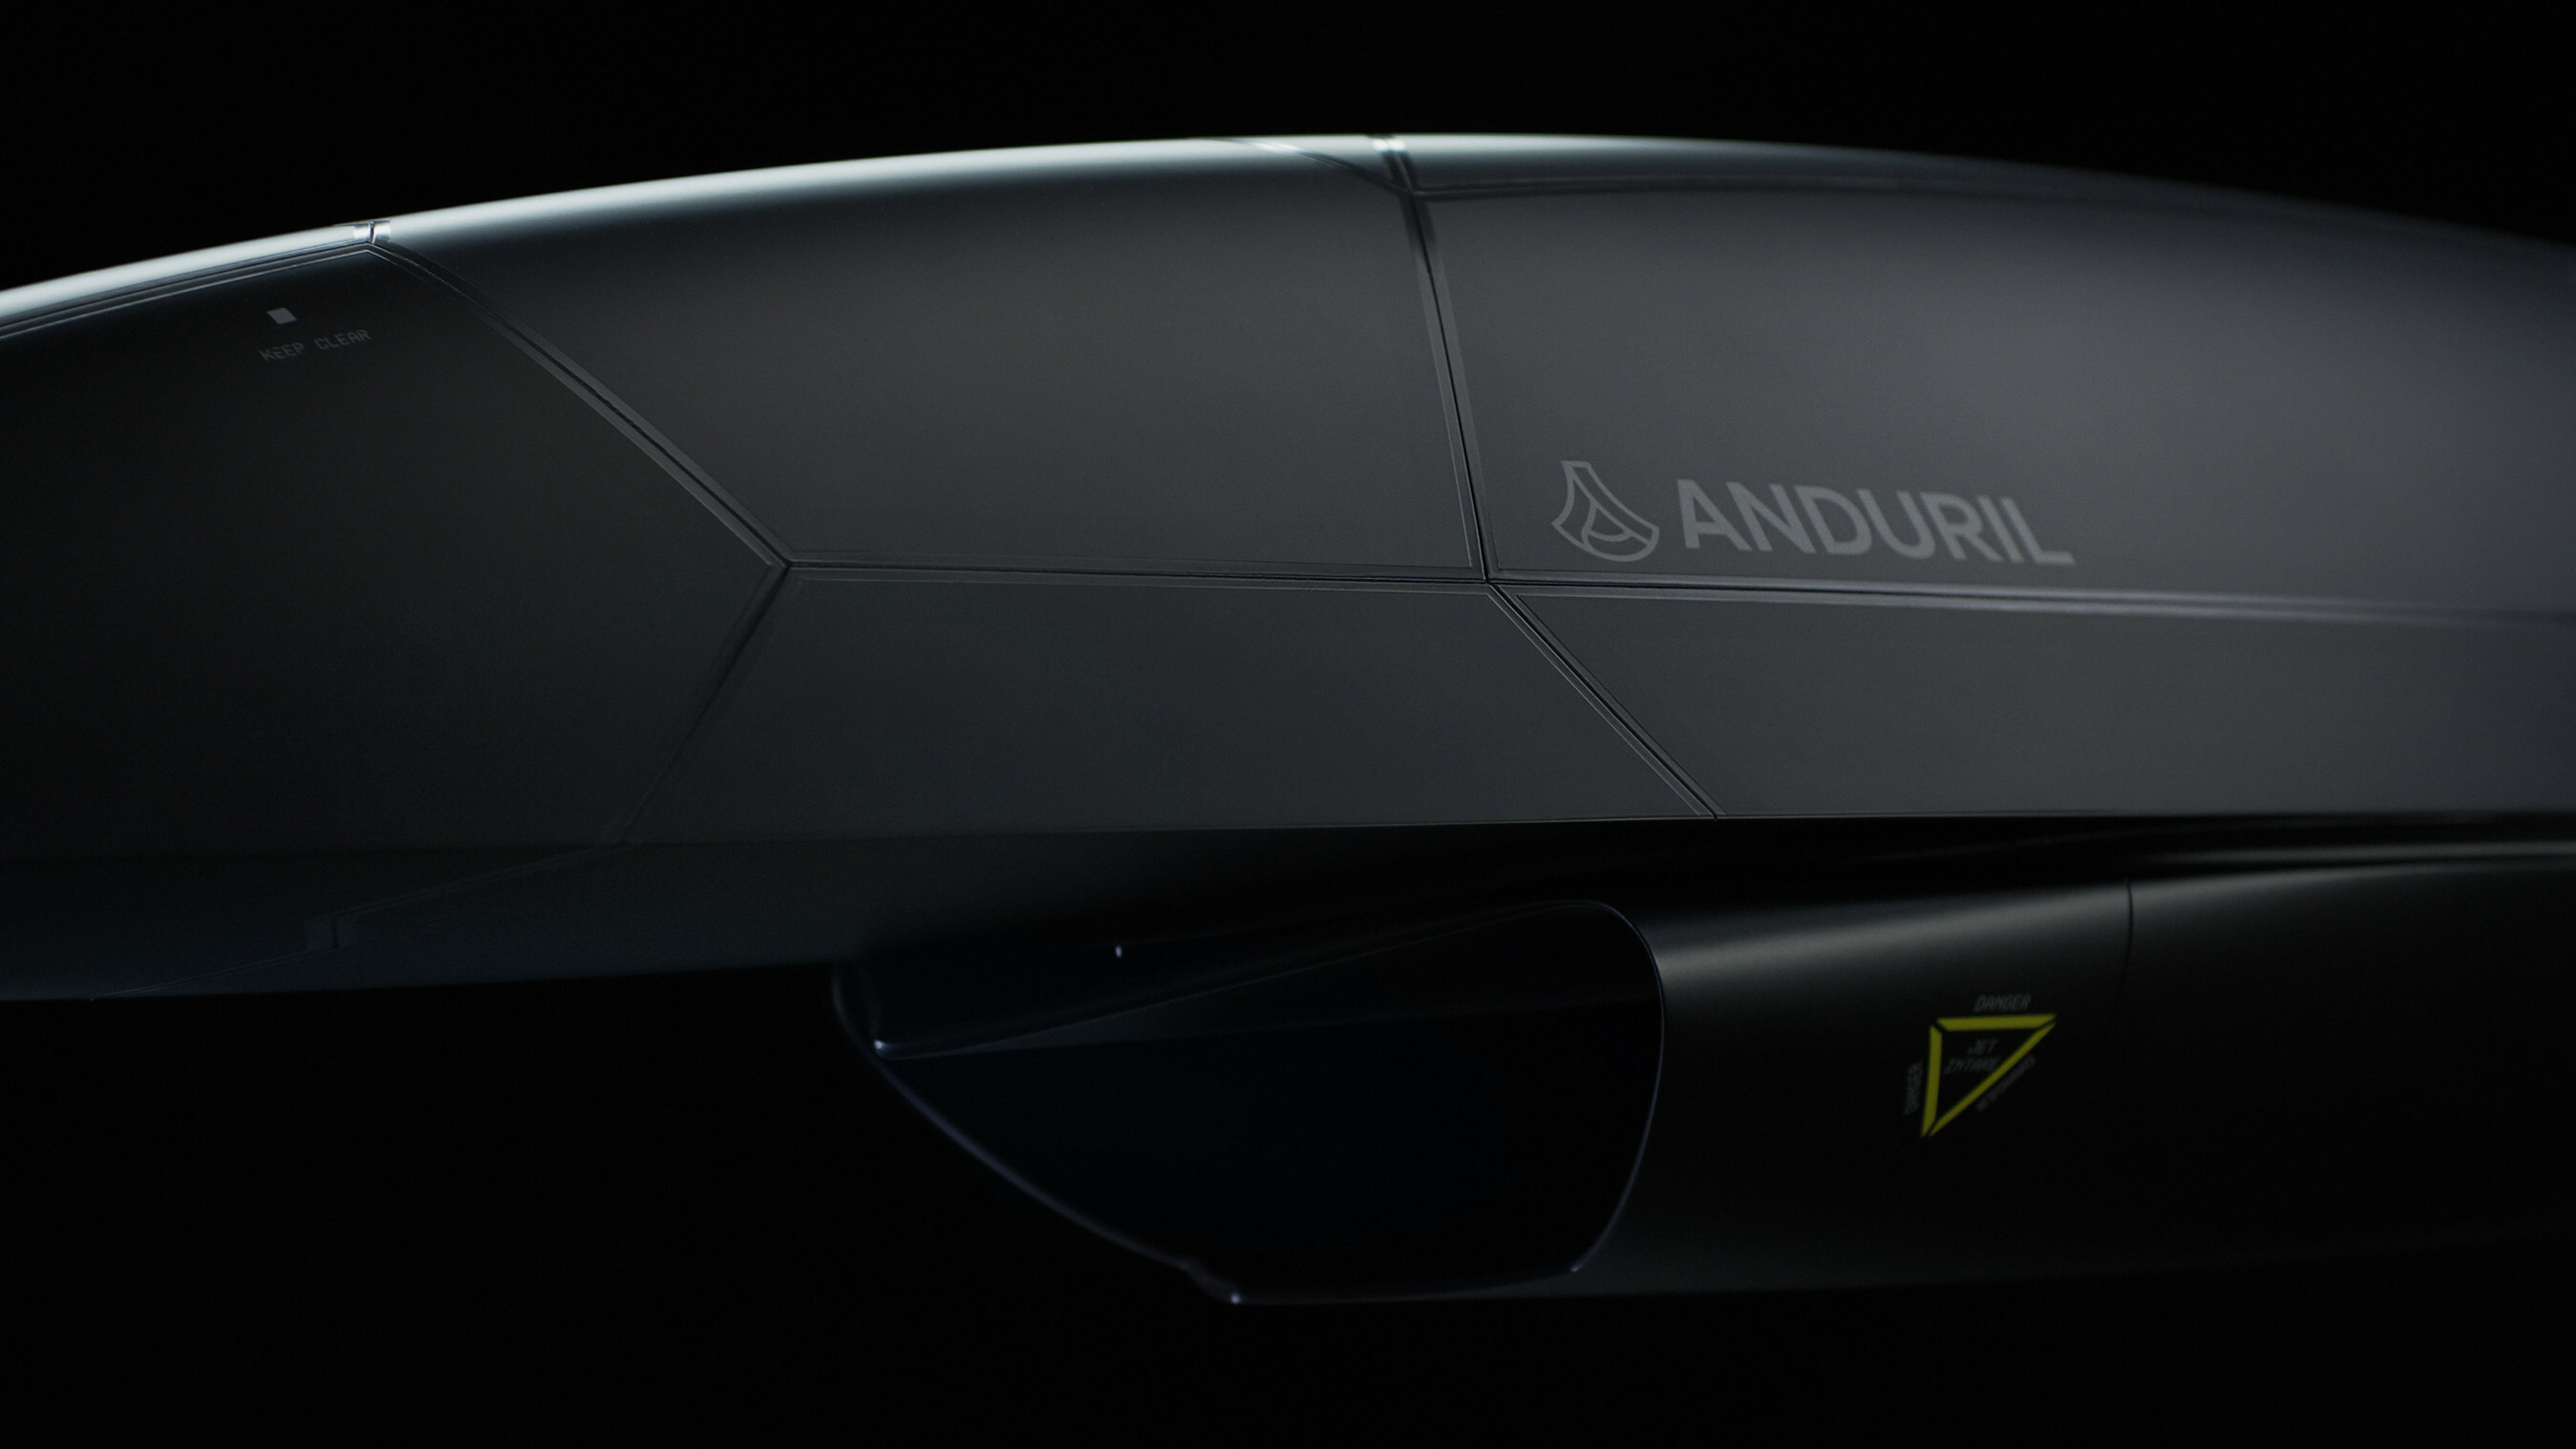 Anduril Acquires Blue Force Technologies, Expanding Its Autonomous System Capabilities